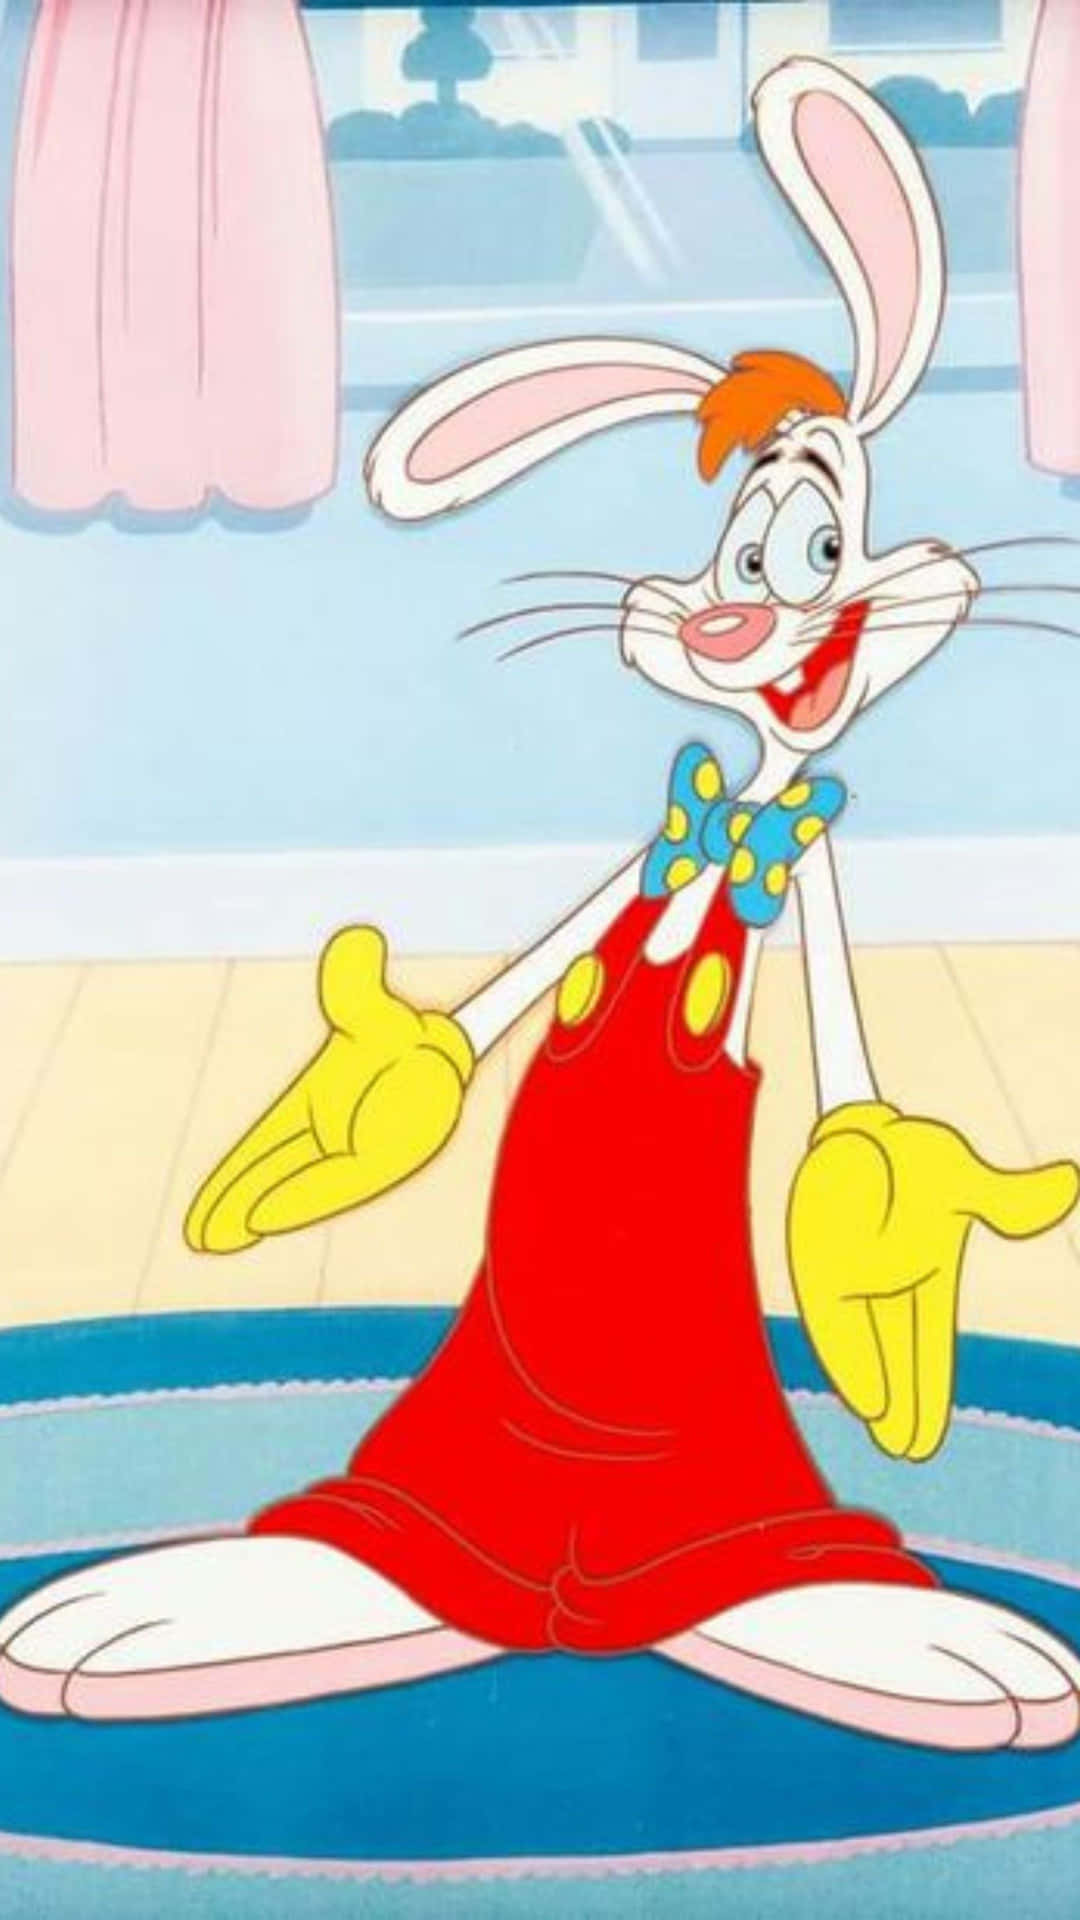 Roger Rabbit Cartoon Character Sitting